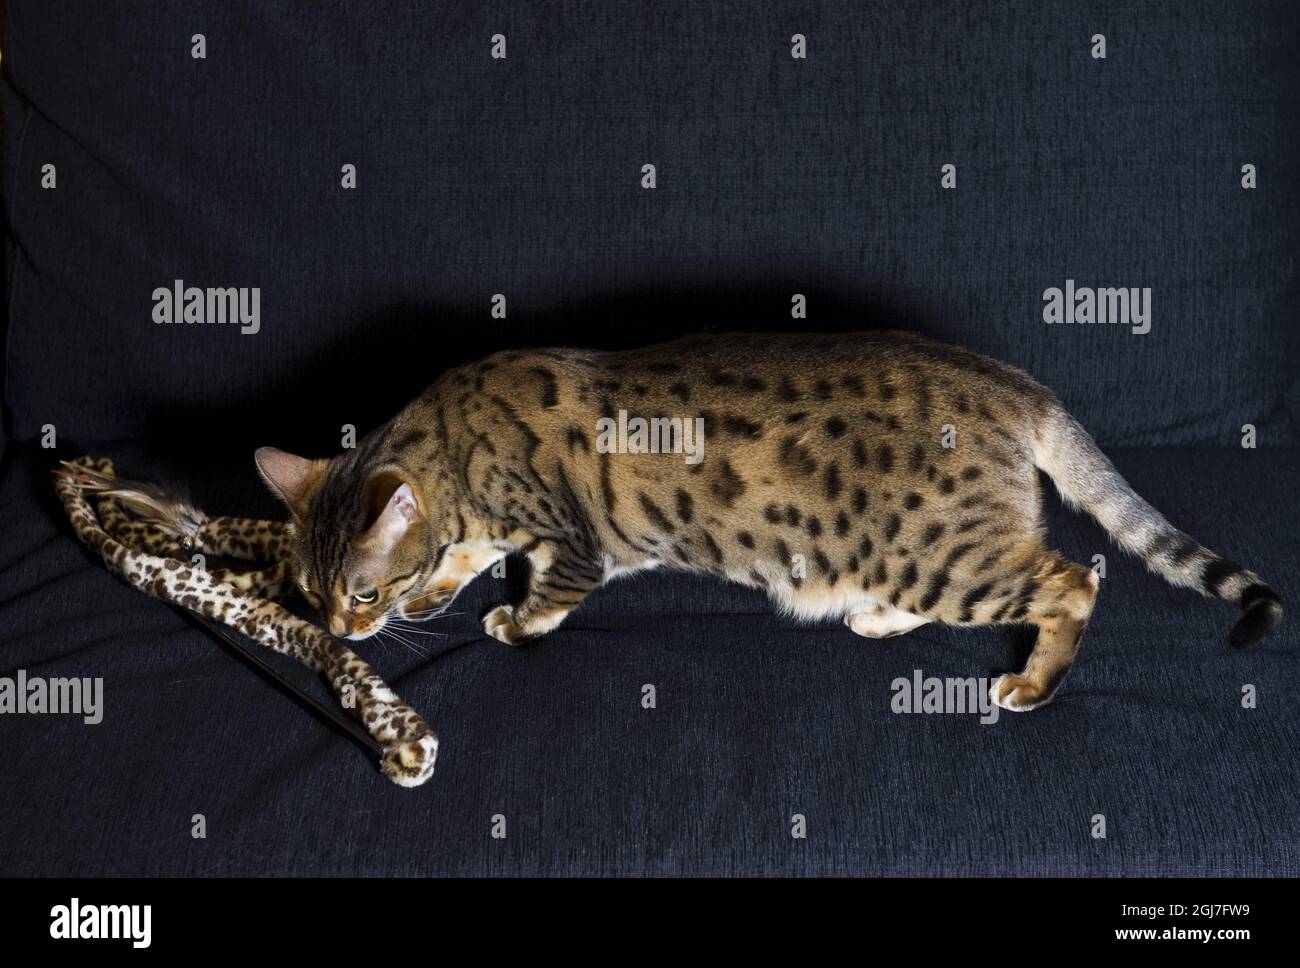 ESTOCOLMO 20100304 Un gato bengal. Foto: Henrik Montgomery / SCANPIX / Kod: 10060 Foto de stock